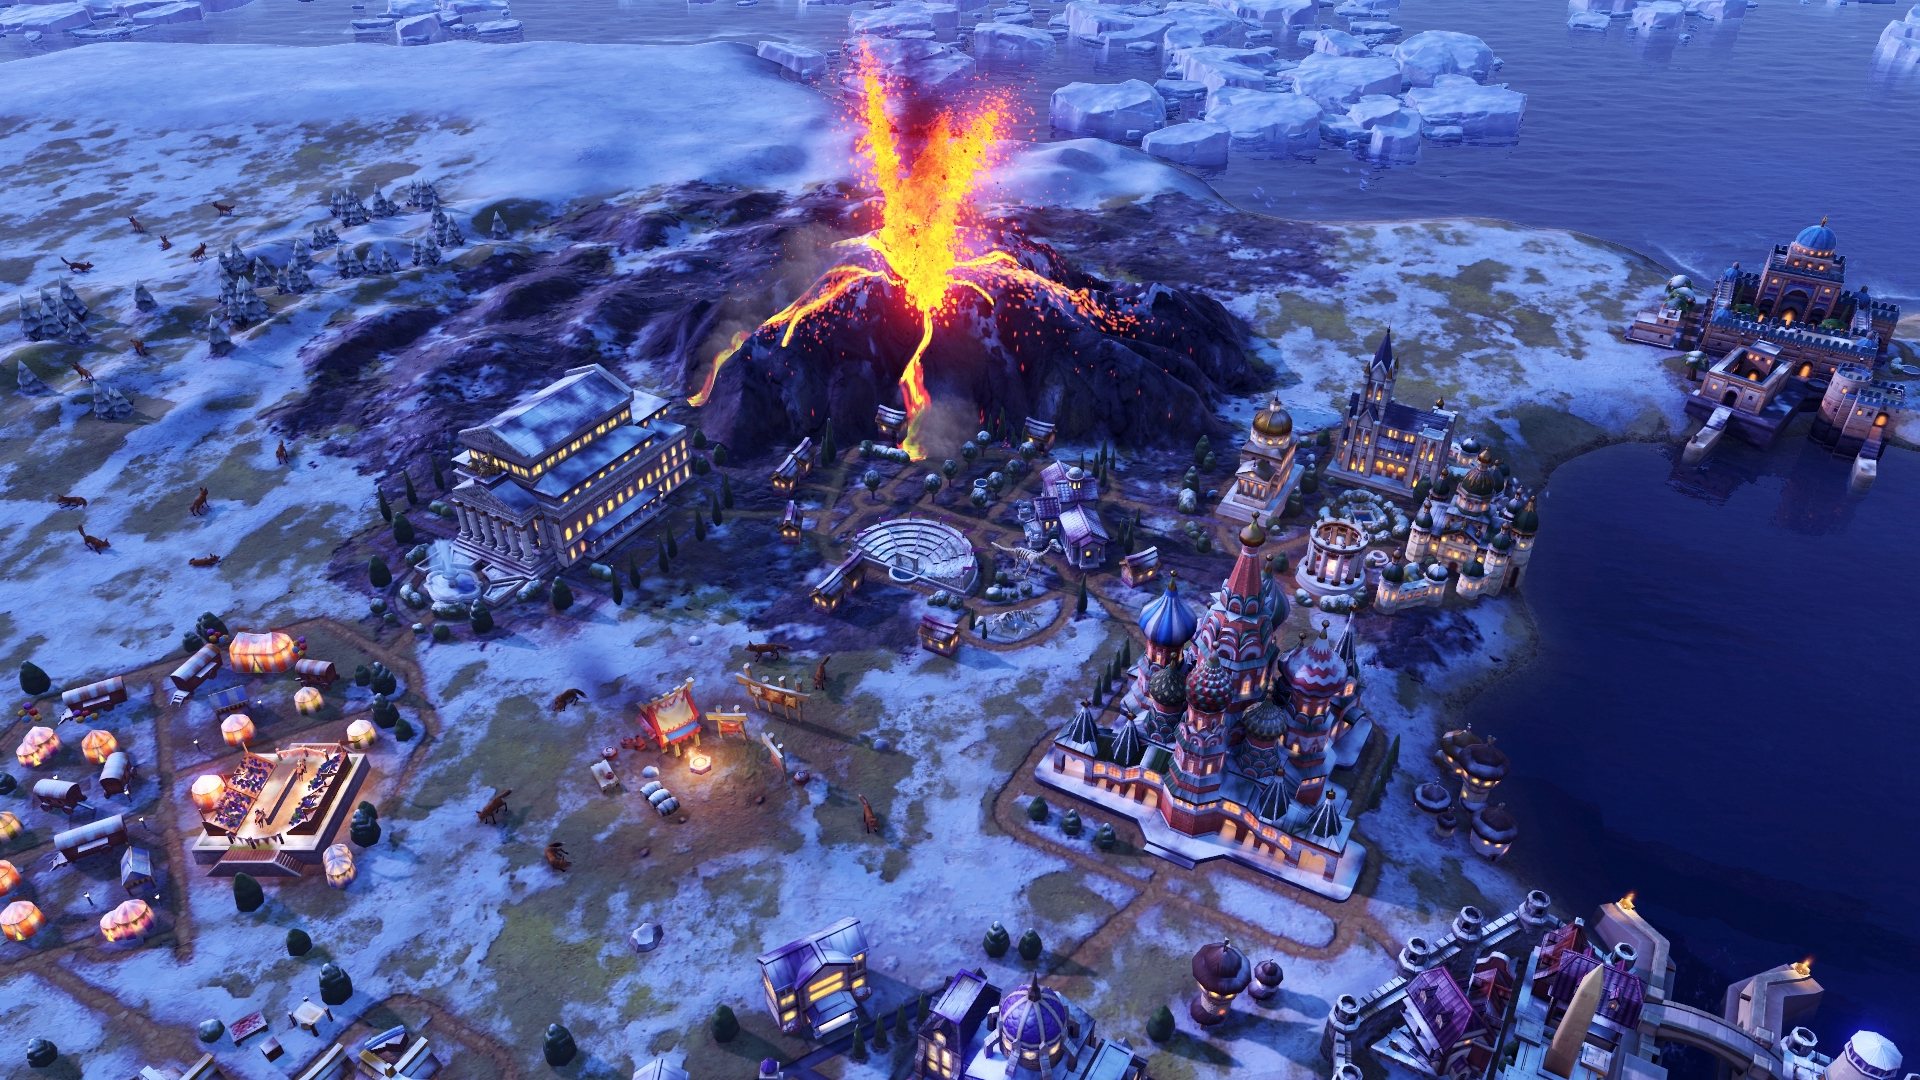 Sid Meier's Civilization VI - Gathering Storm DLC Steam Altergift [USD 5.79]